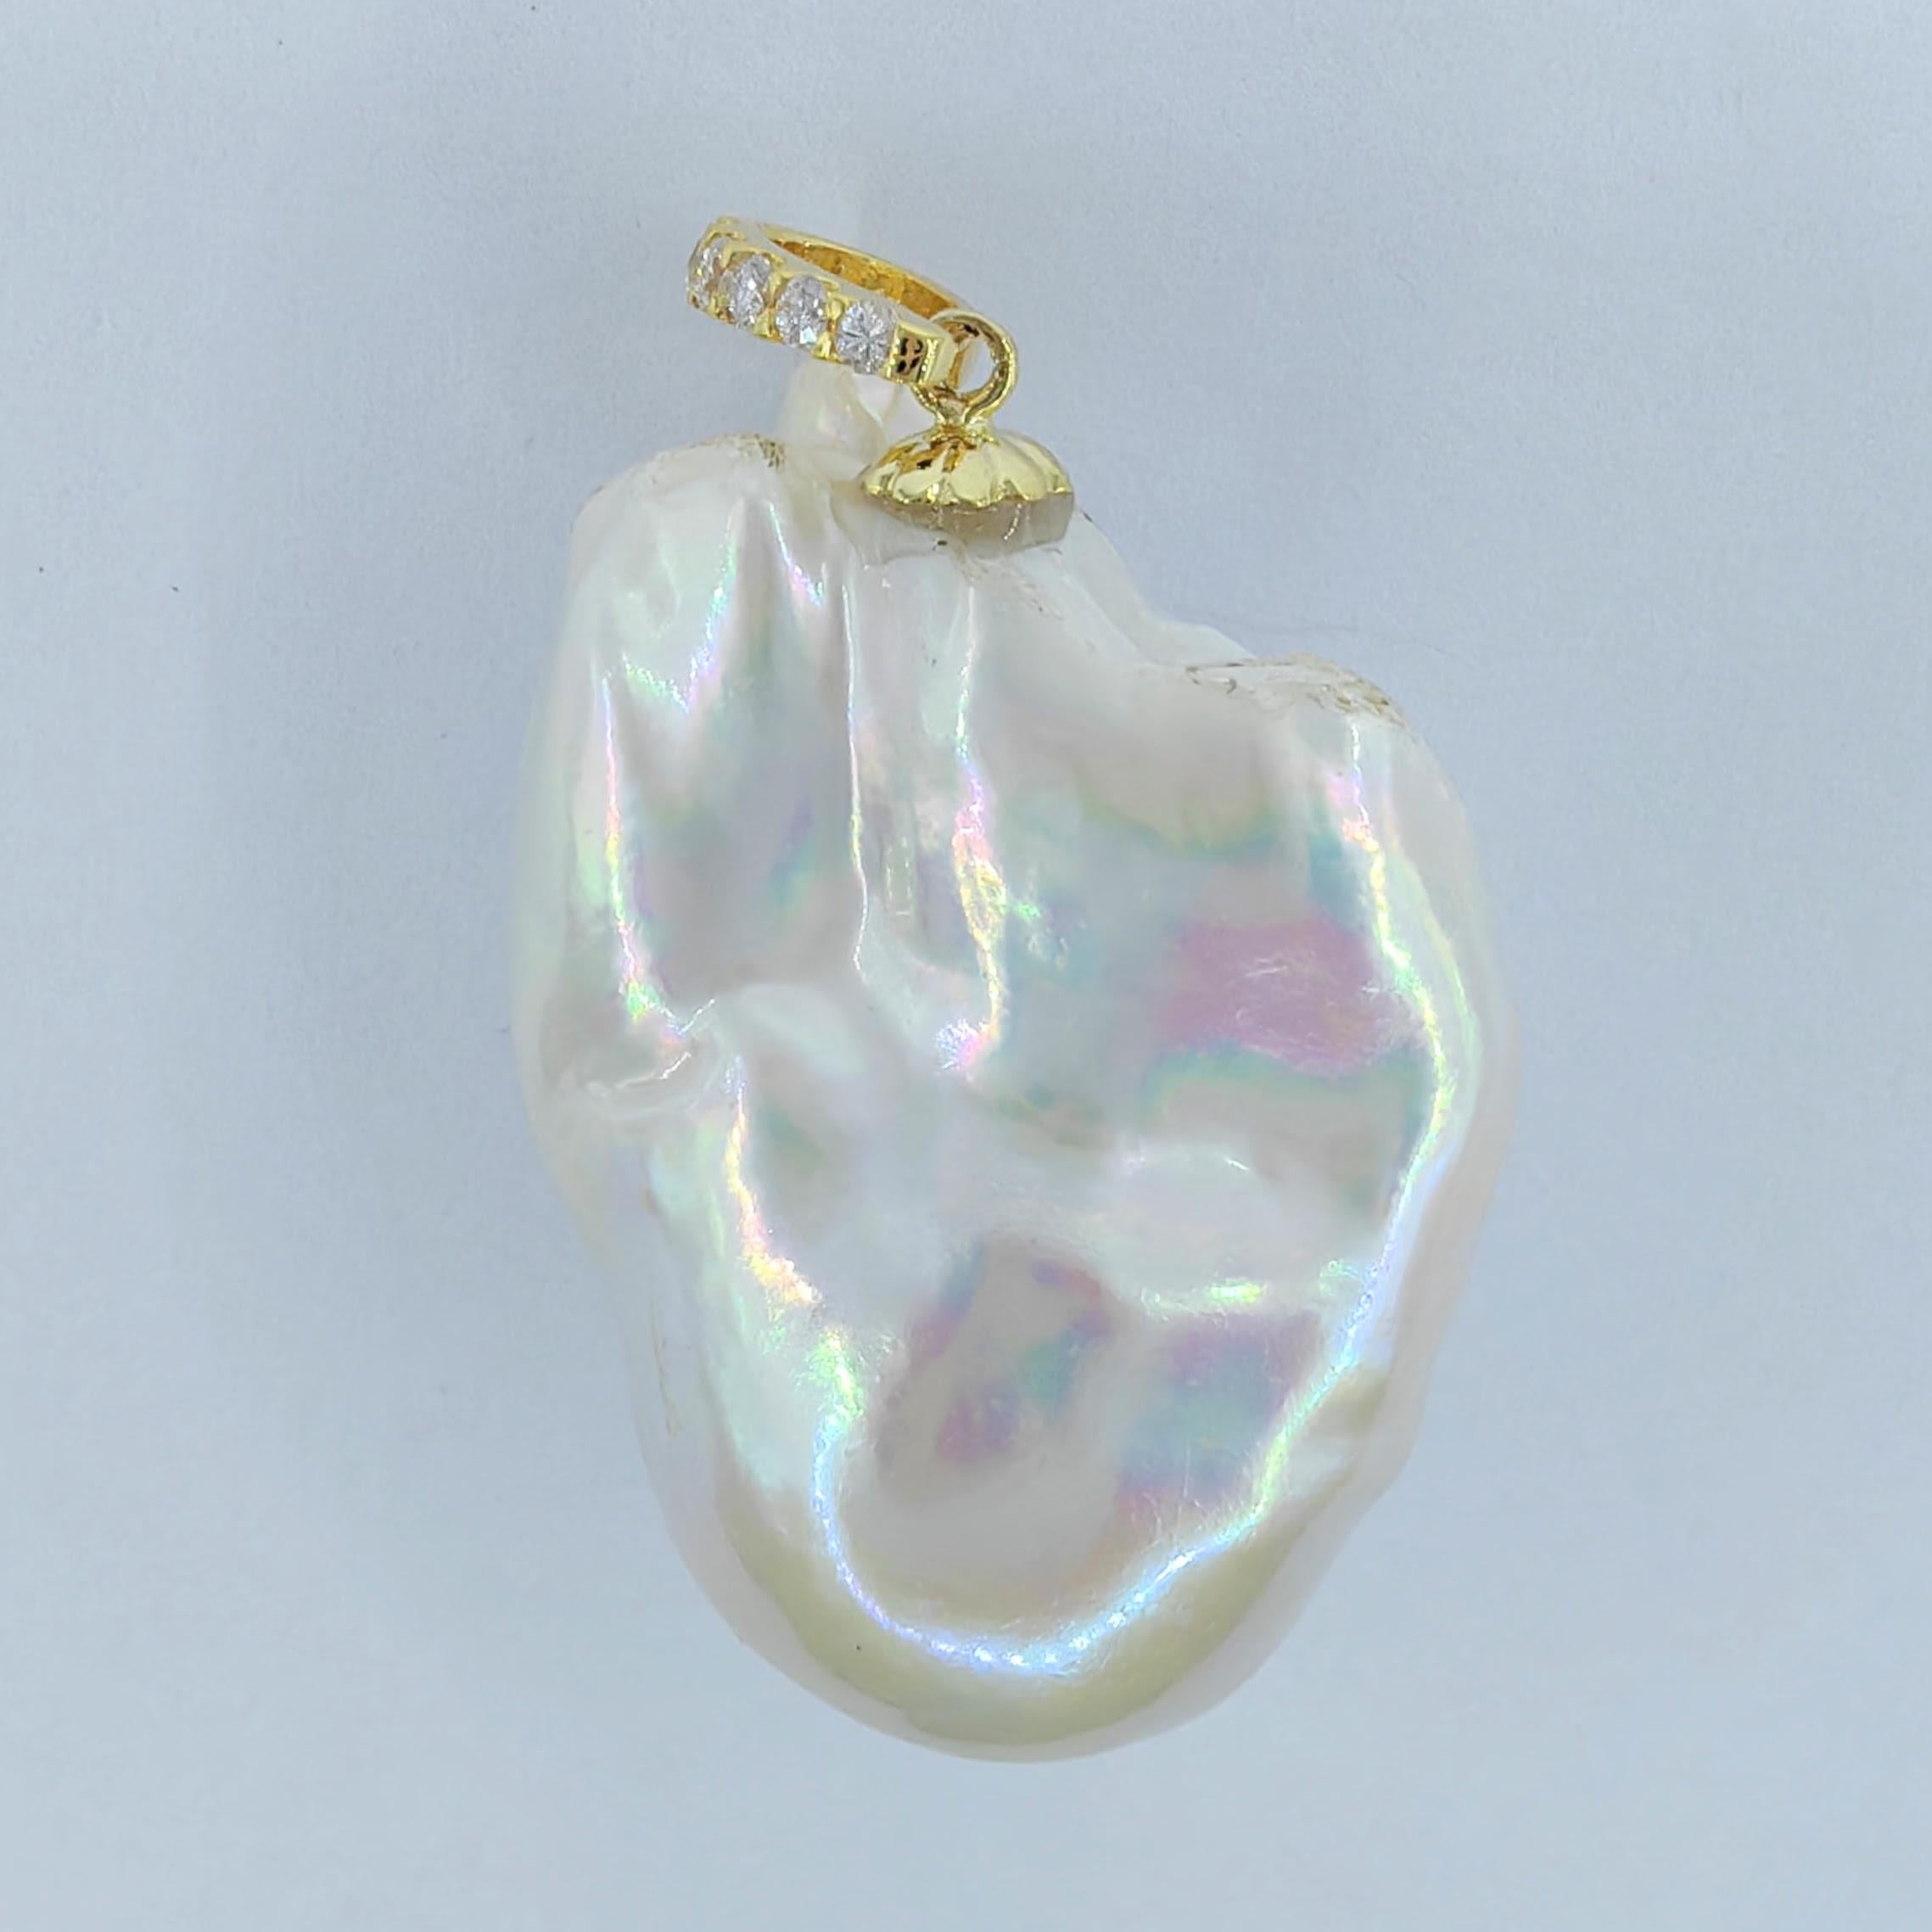 49.24ct Iridescent Baroque Pearl Diamond 18K Pendant & 22K Chain in Yellow Gold For Sale 3